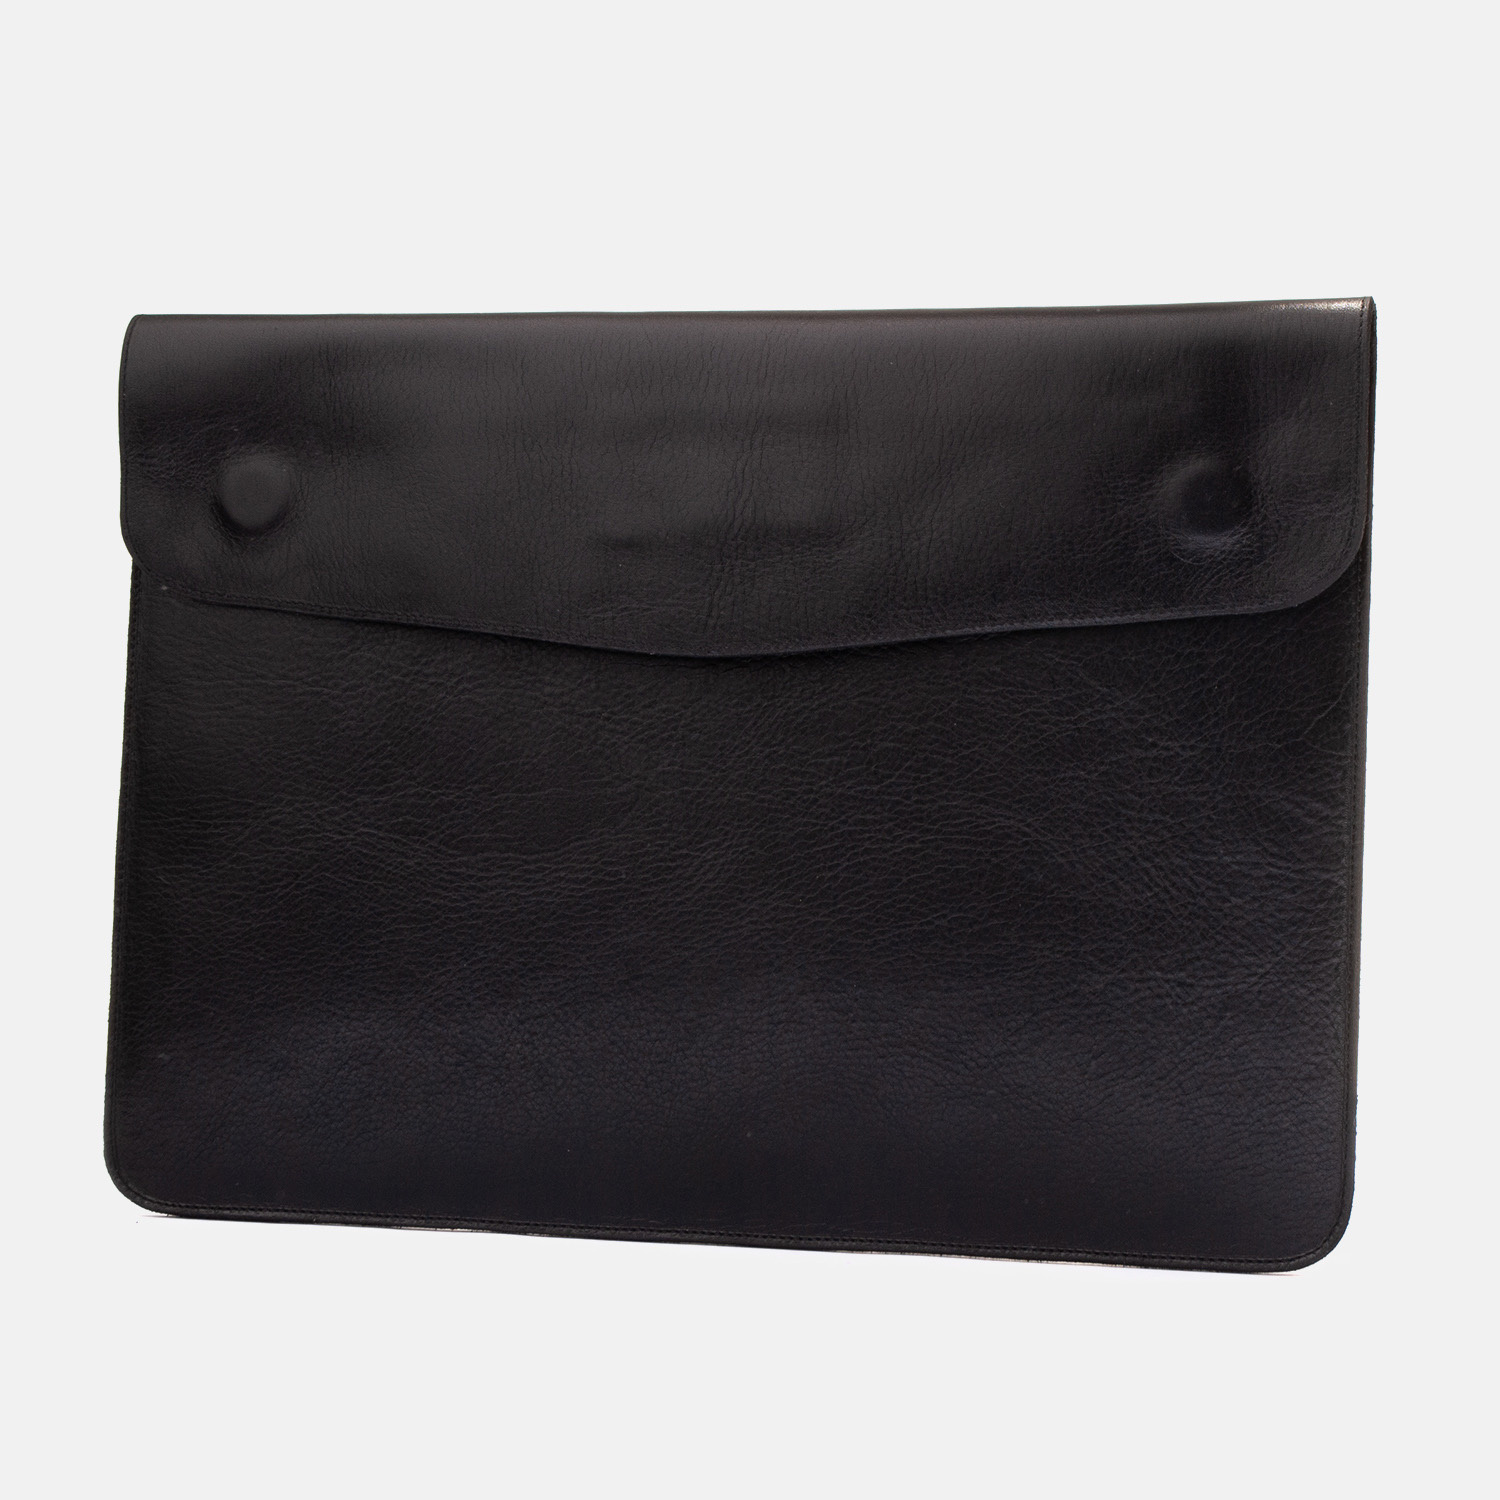 Laptop leather case